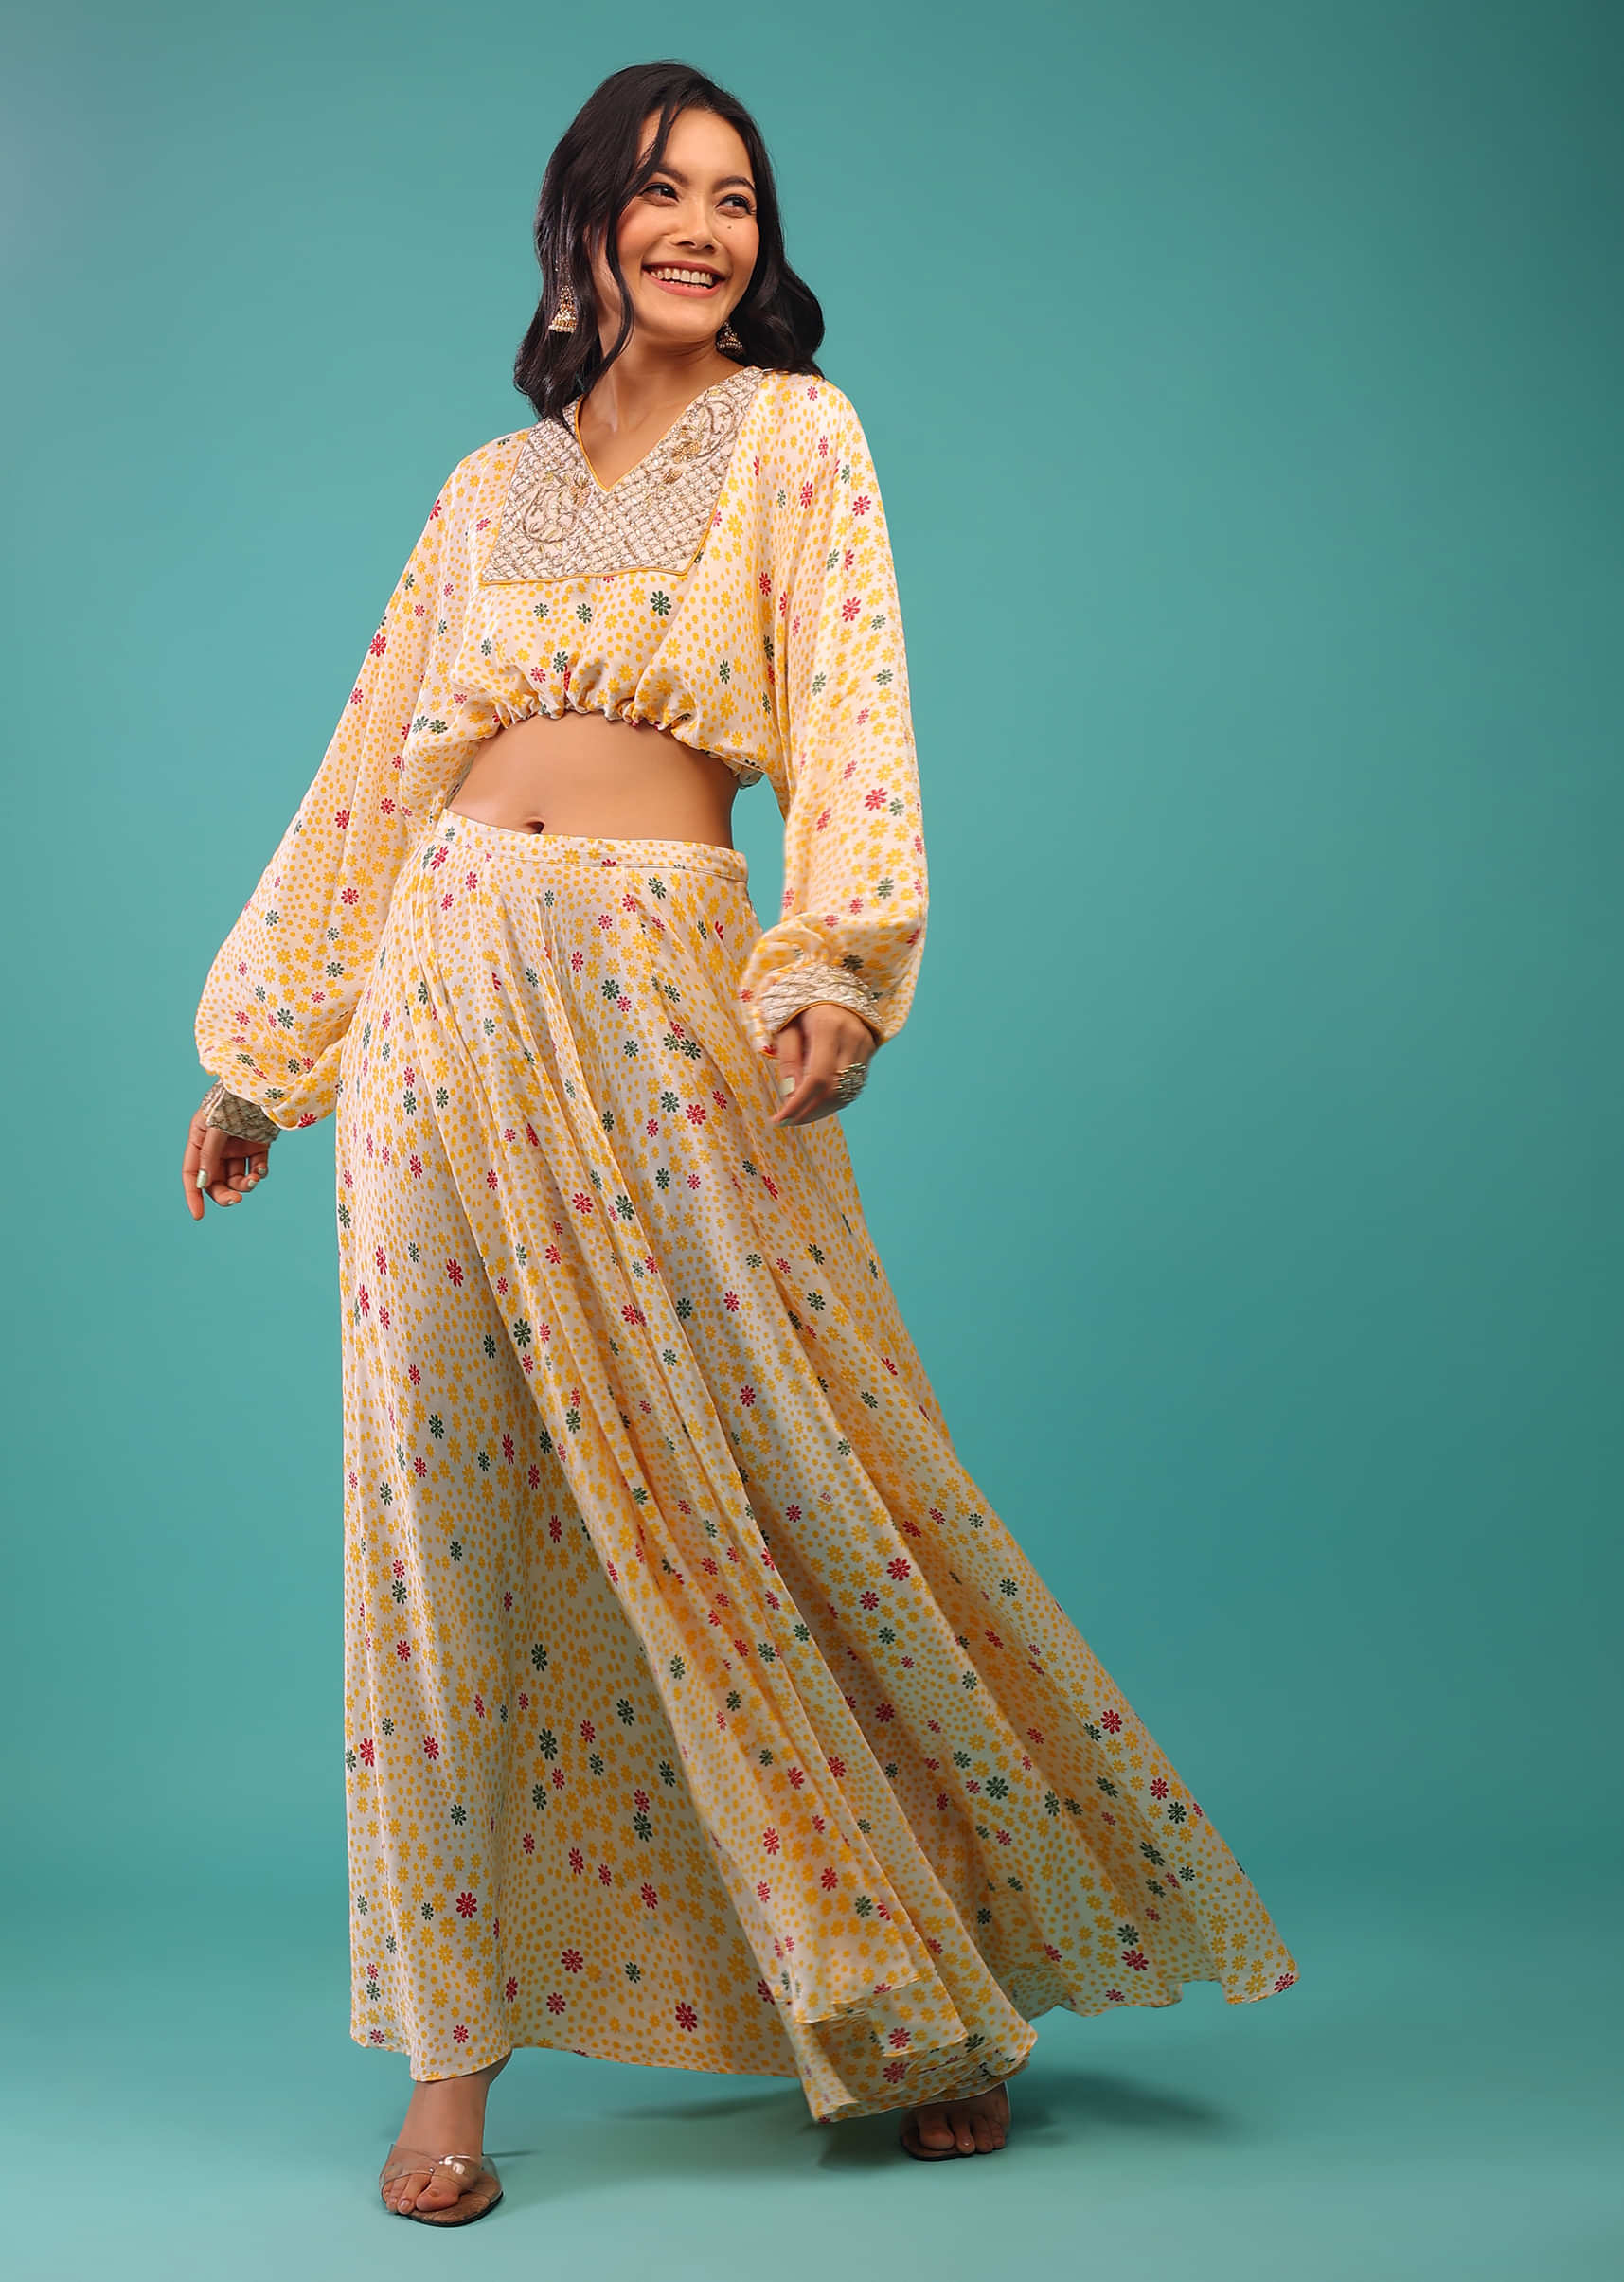 Buy Yellow & White Satin Floral Print Crop Top & Skirt Online